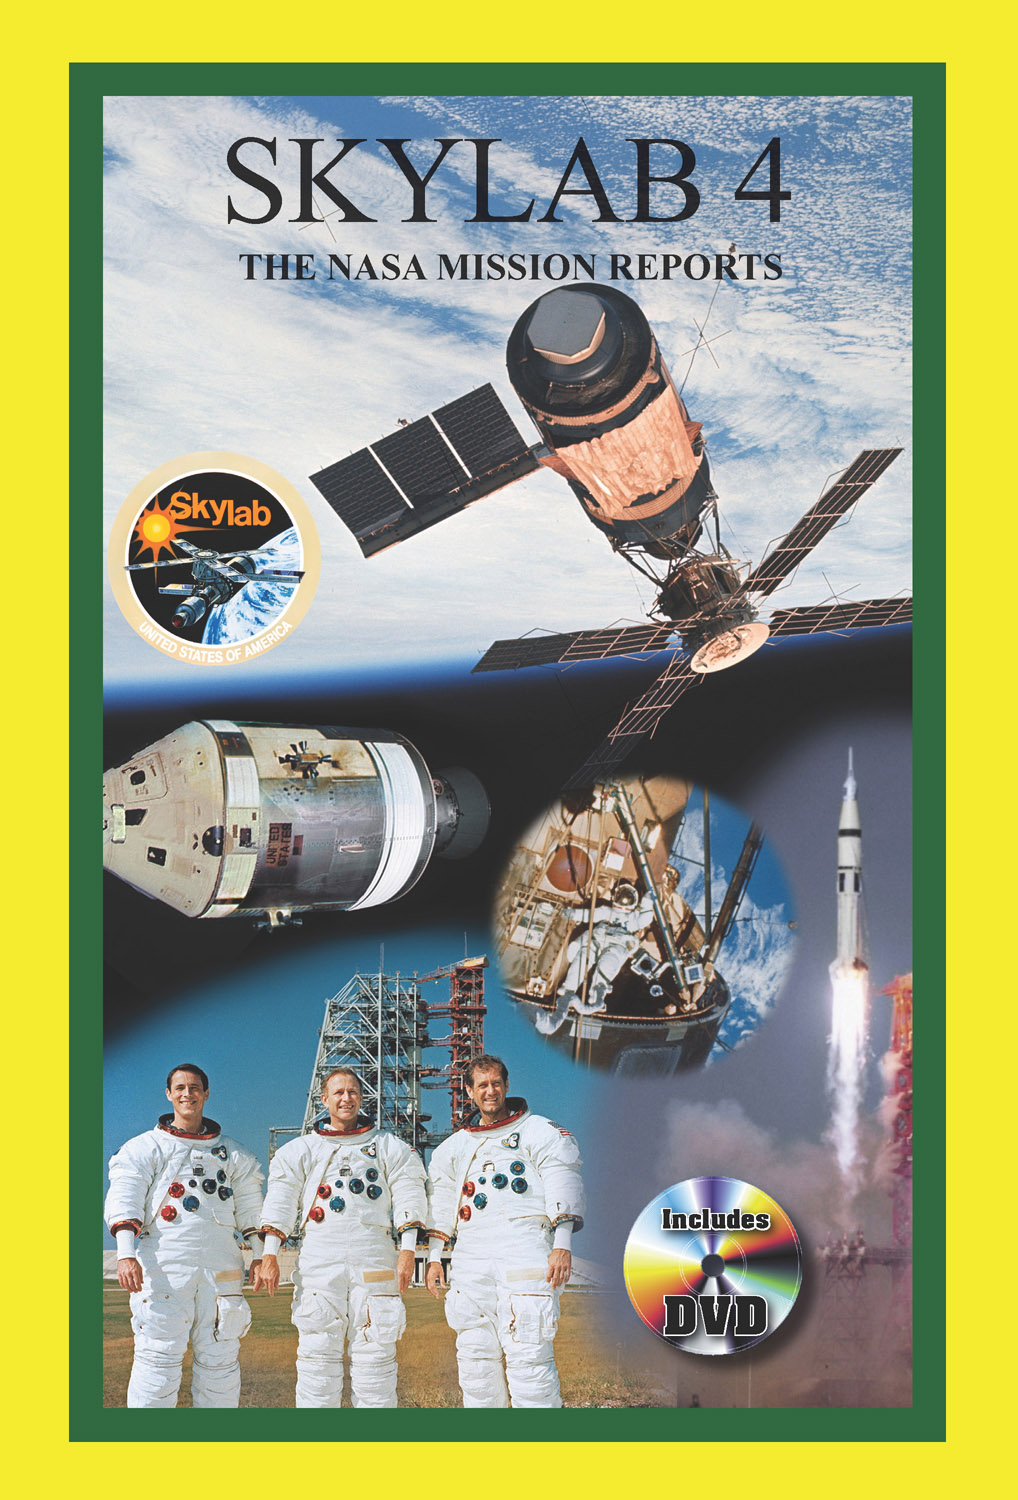 Skylab 4 the NASA Mission Reports by Dwight Steven Boniecki An Apogee Books Publication